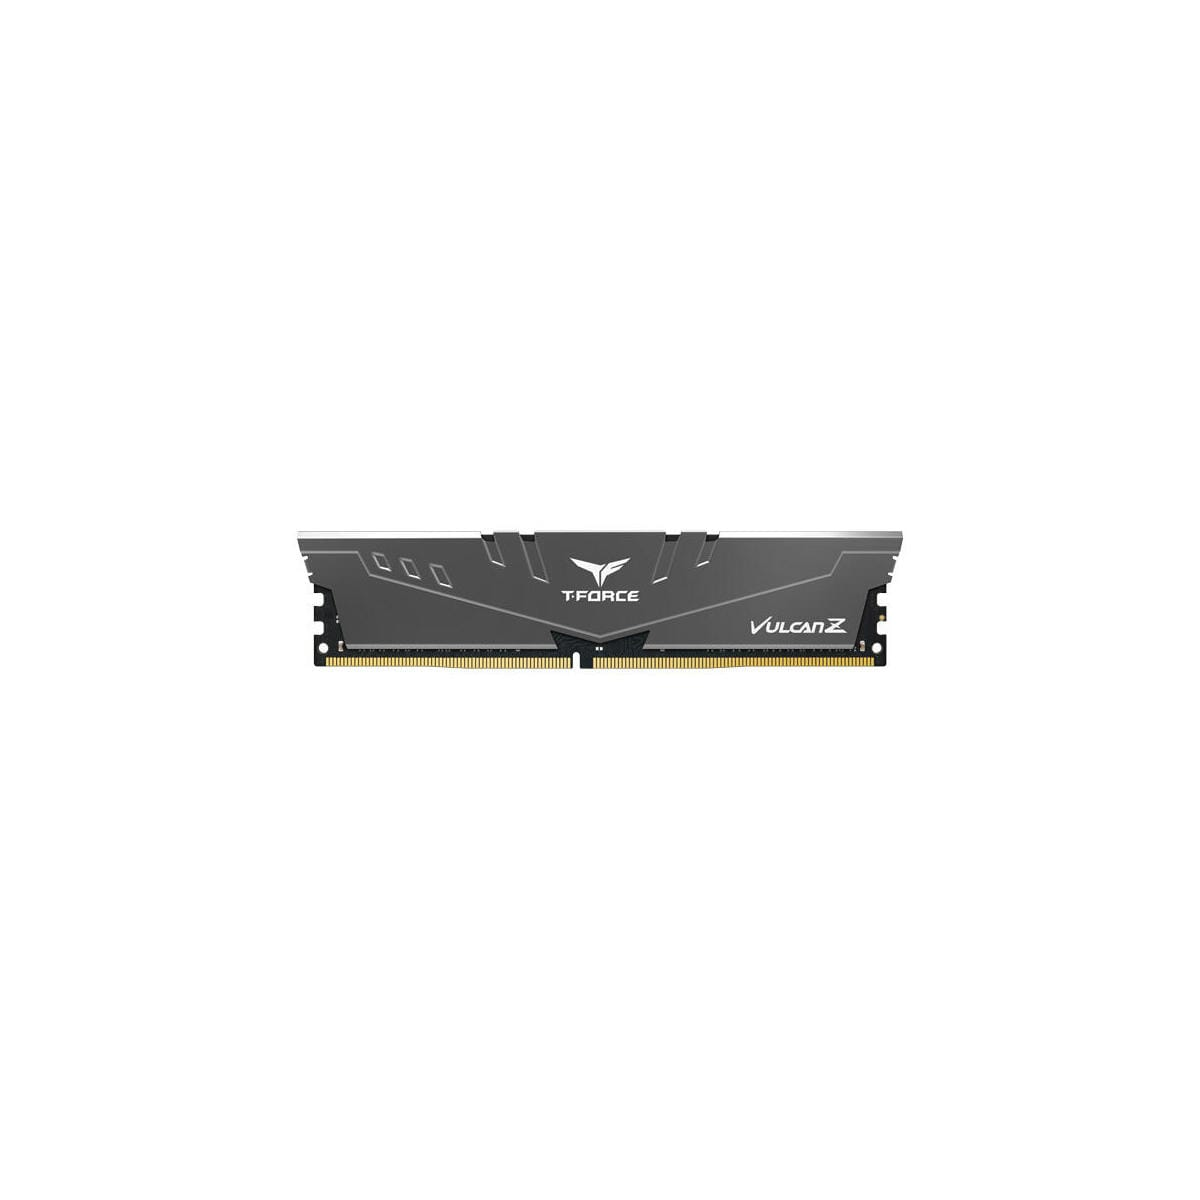 OTROS 2x16GB, 1.35V, Vulcan Z GB DDR4 Speicher-Kit grey series, 32